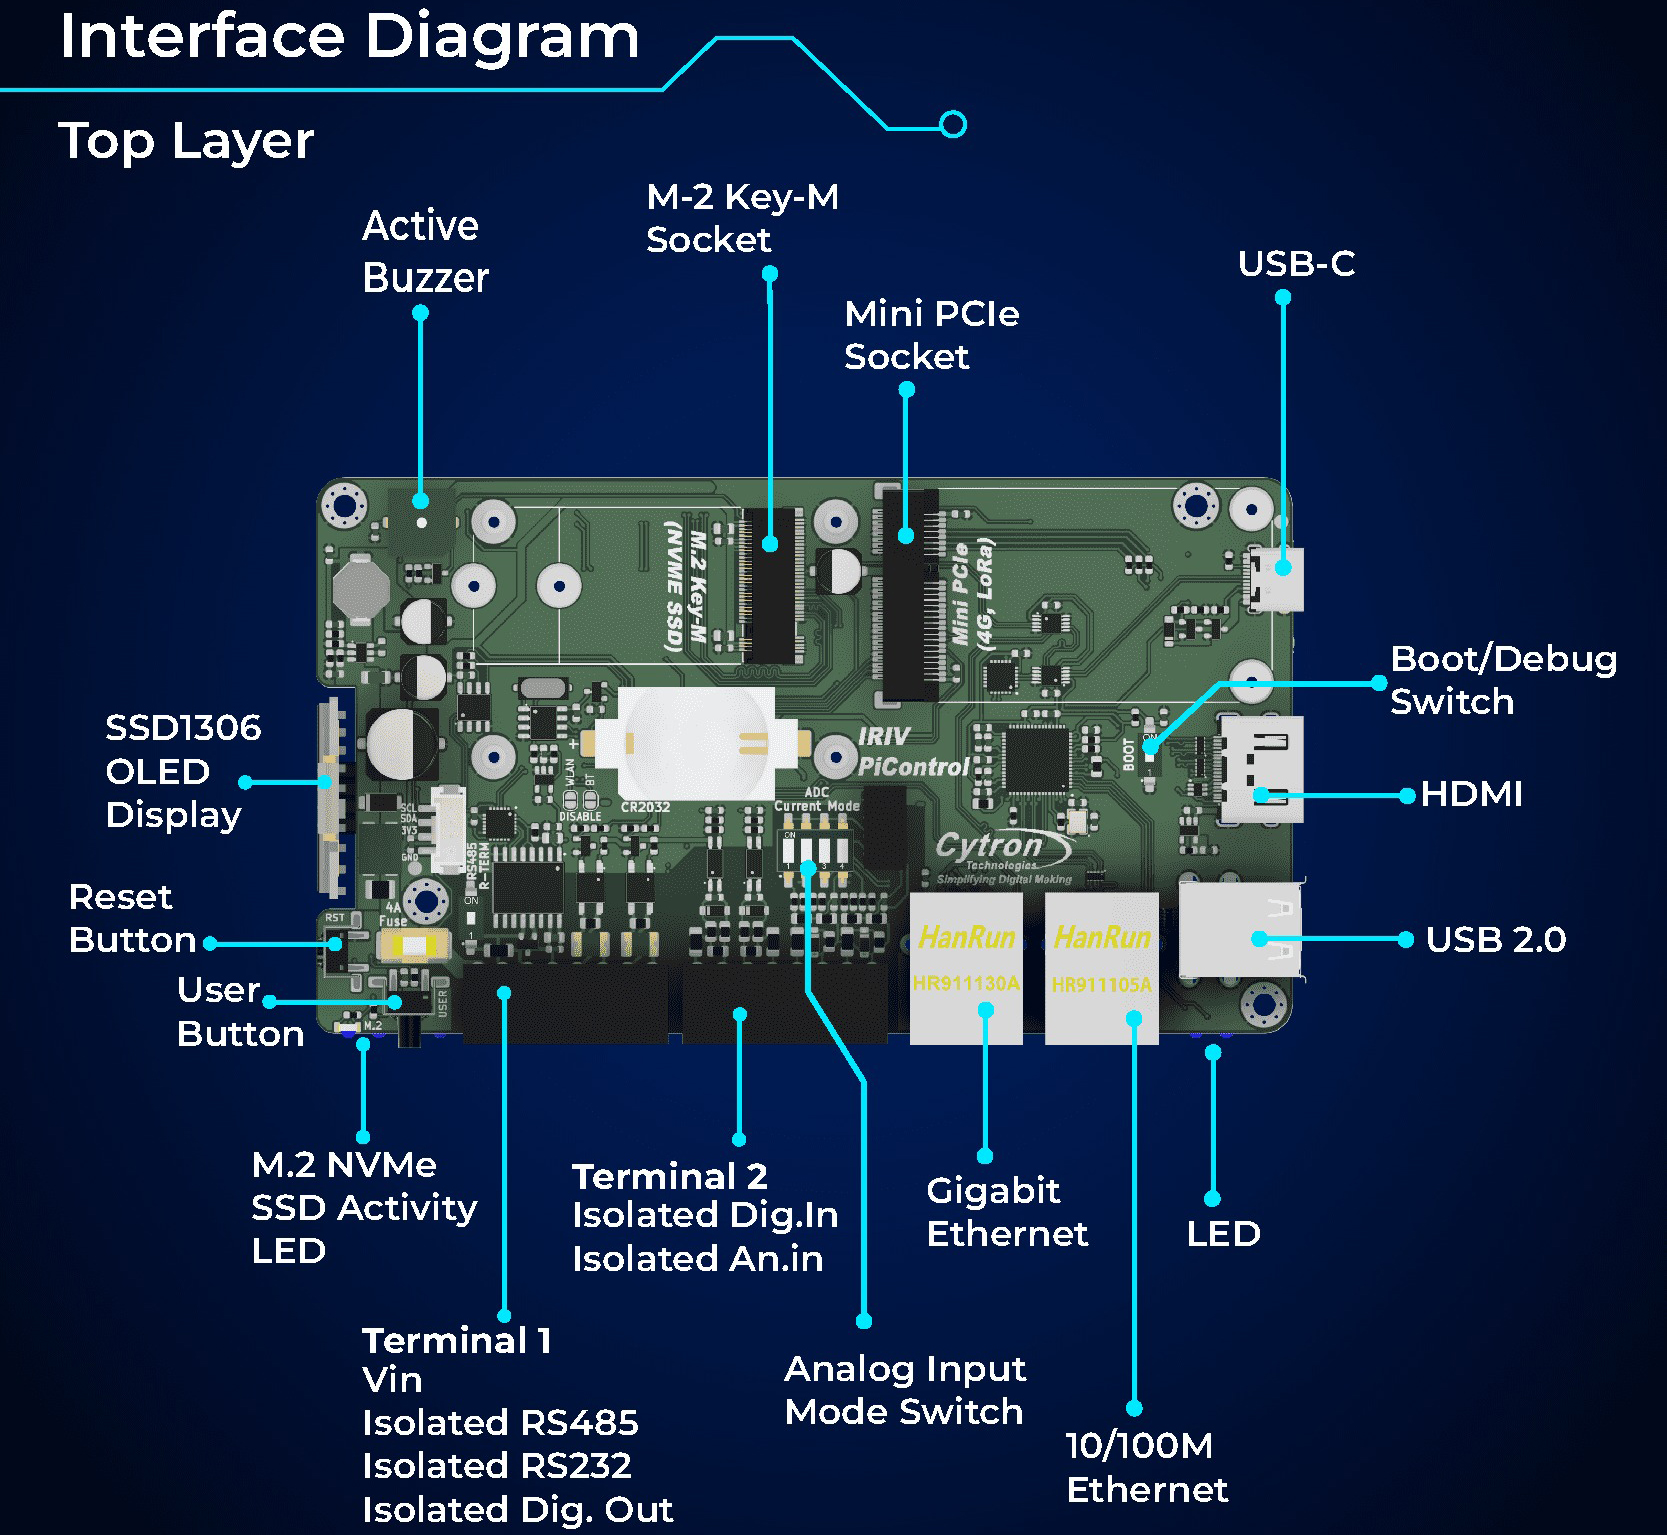 Controlador Industrial IRIV PiControl - IR4.0 CM4 c/ 4GB RAM, 32GB eMMC Inalámbrico